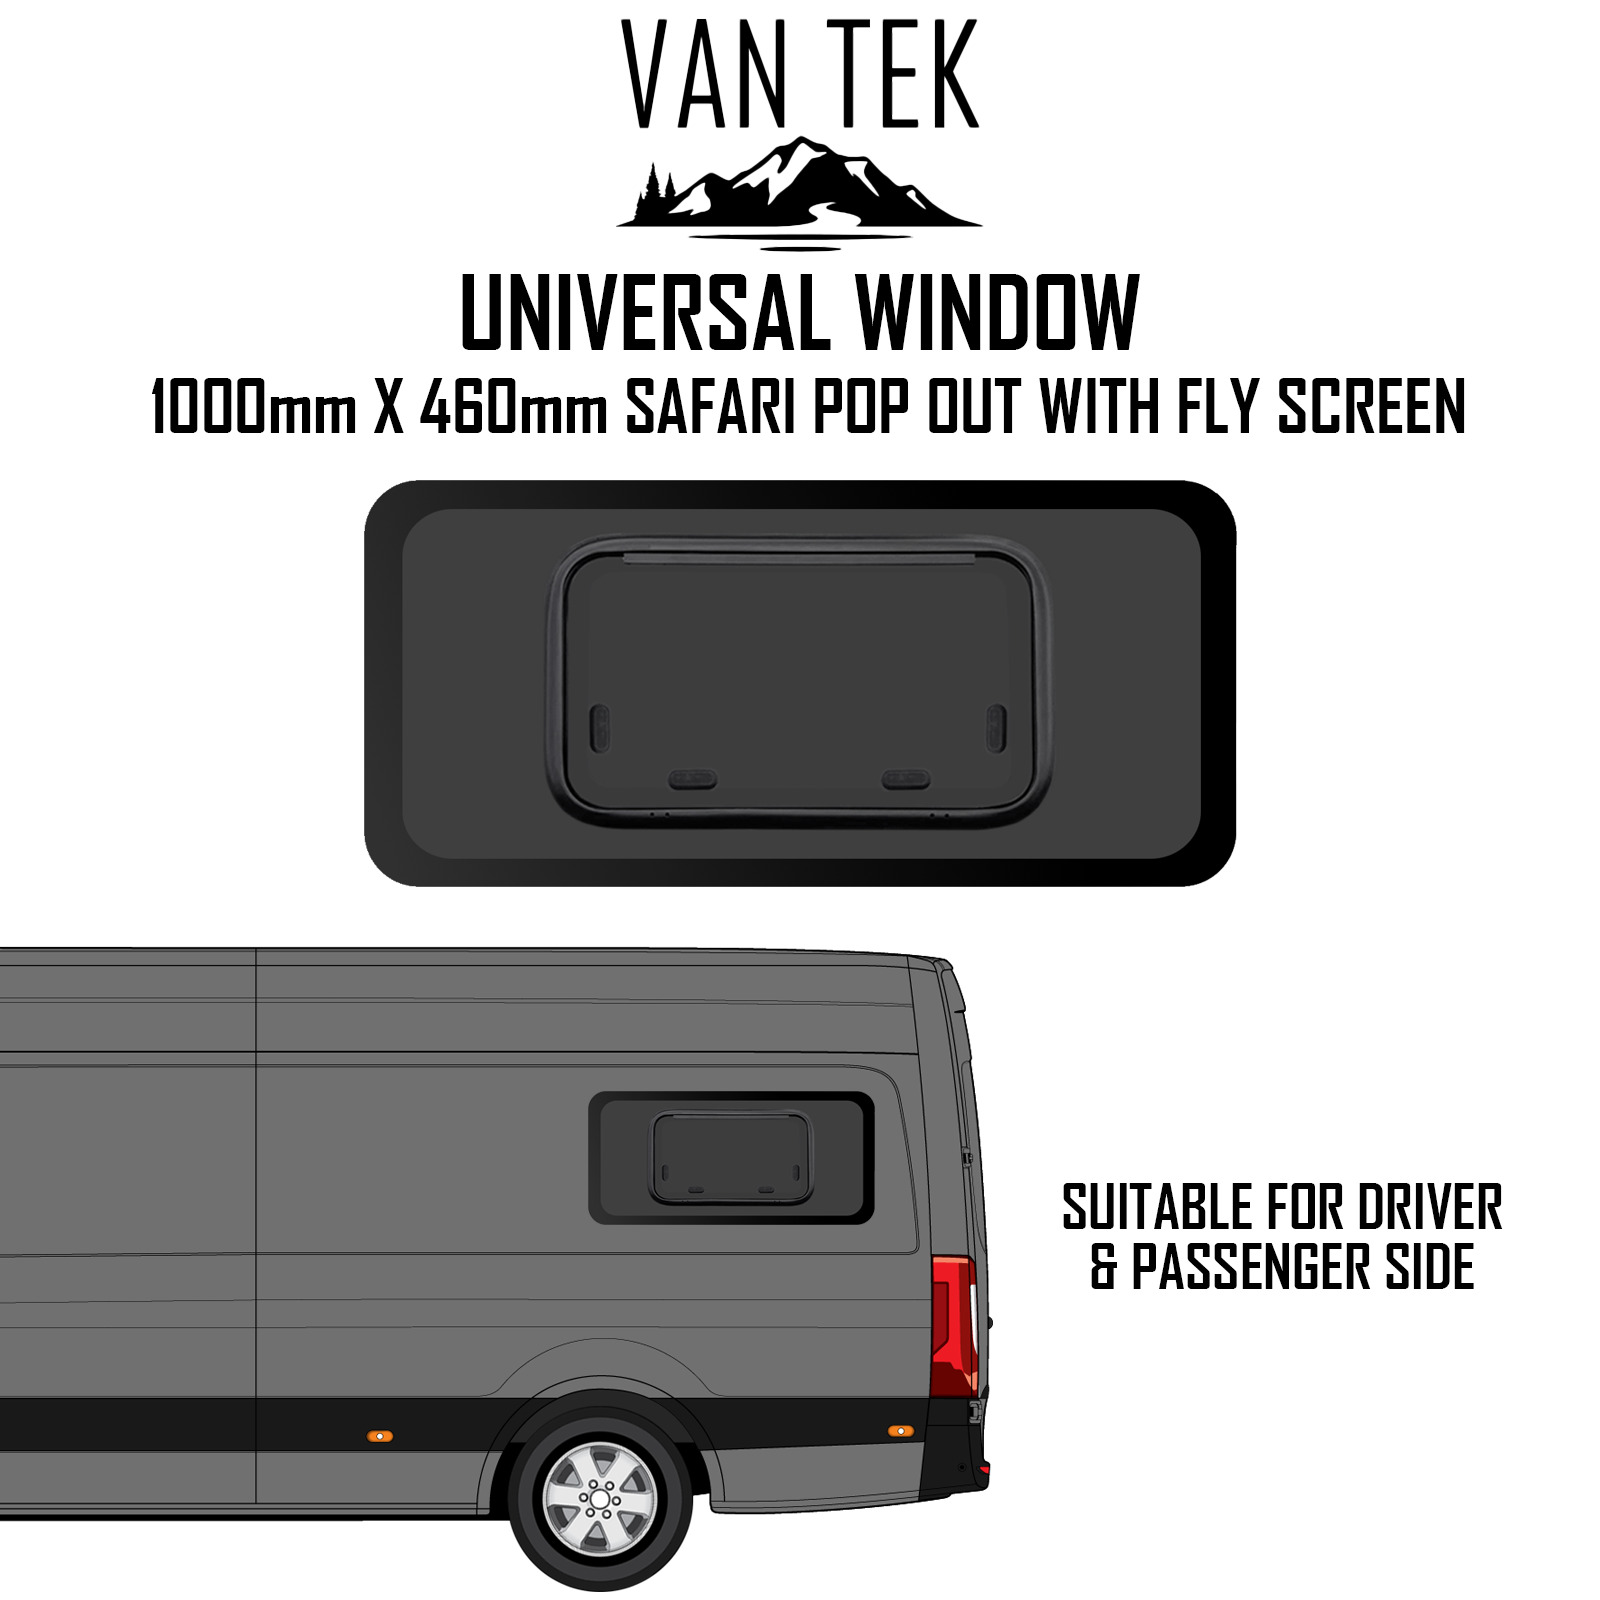 Universal SAFARI POP OUT Window 1000mm x 460mm WITH FLY SCREEN  Van Tek Glass